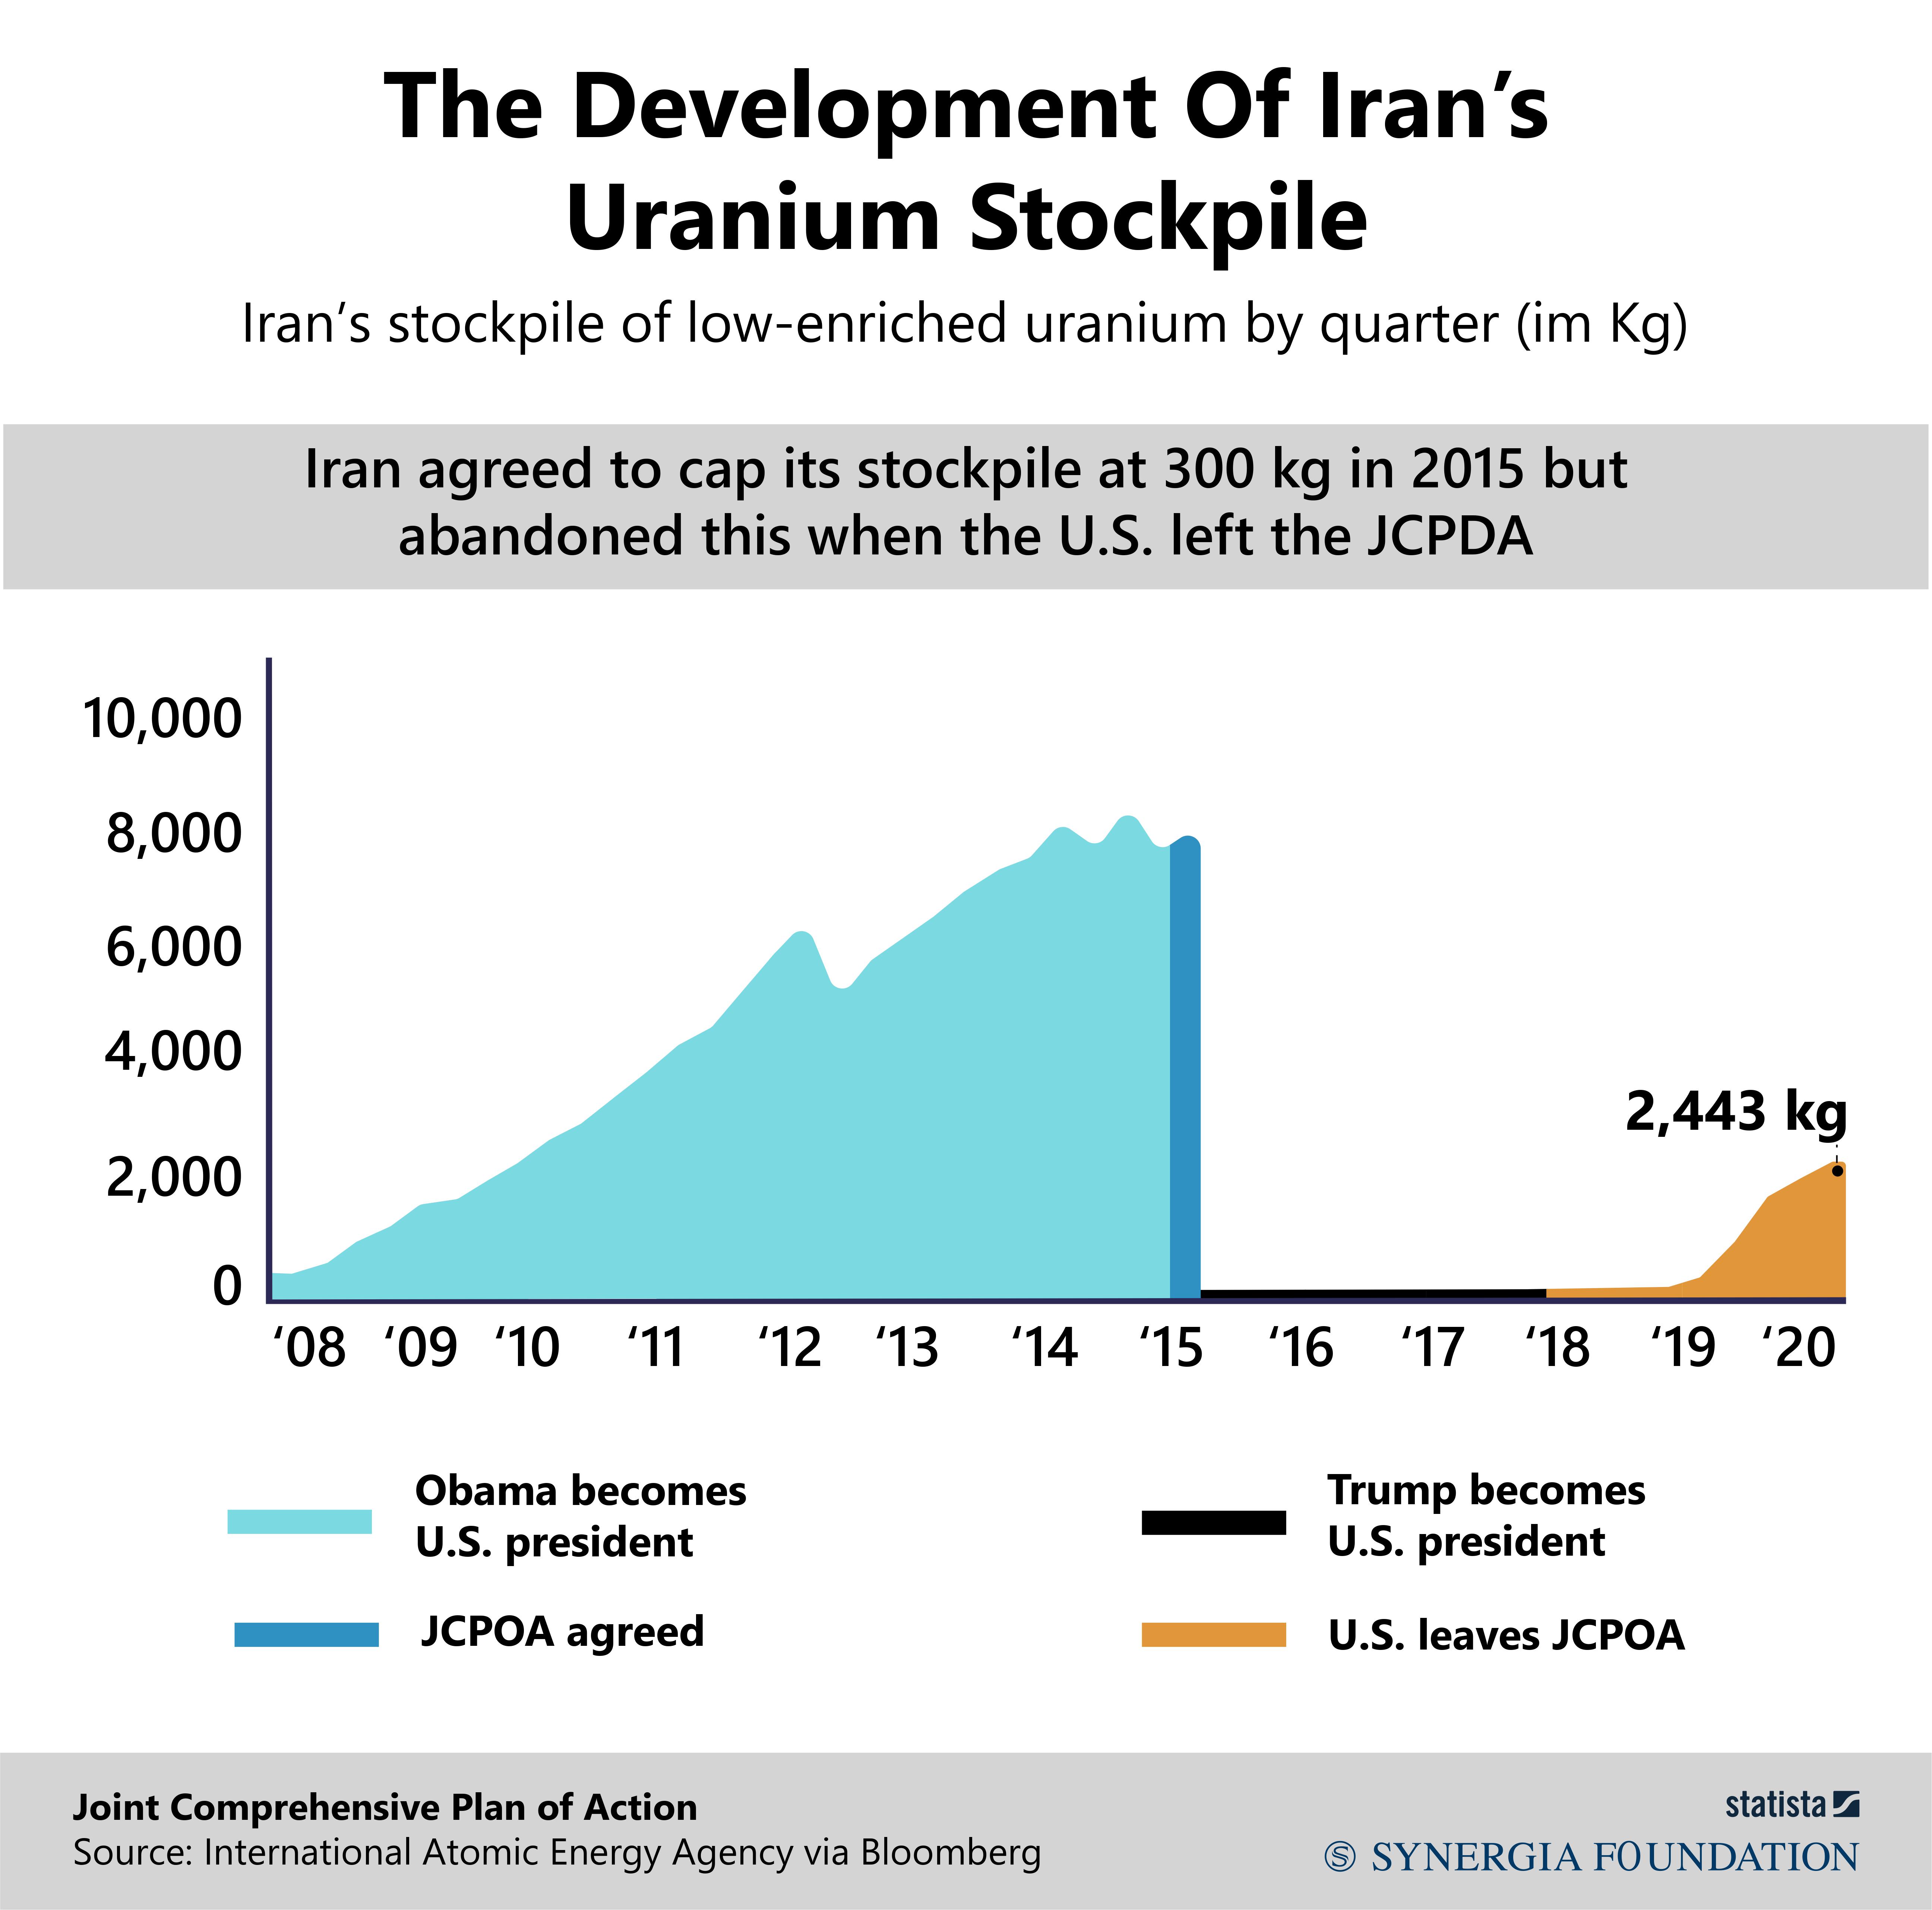 The Development Of Iran’s Uranium Stockpile